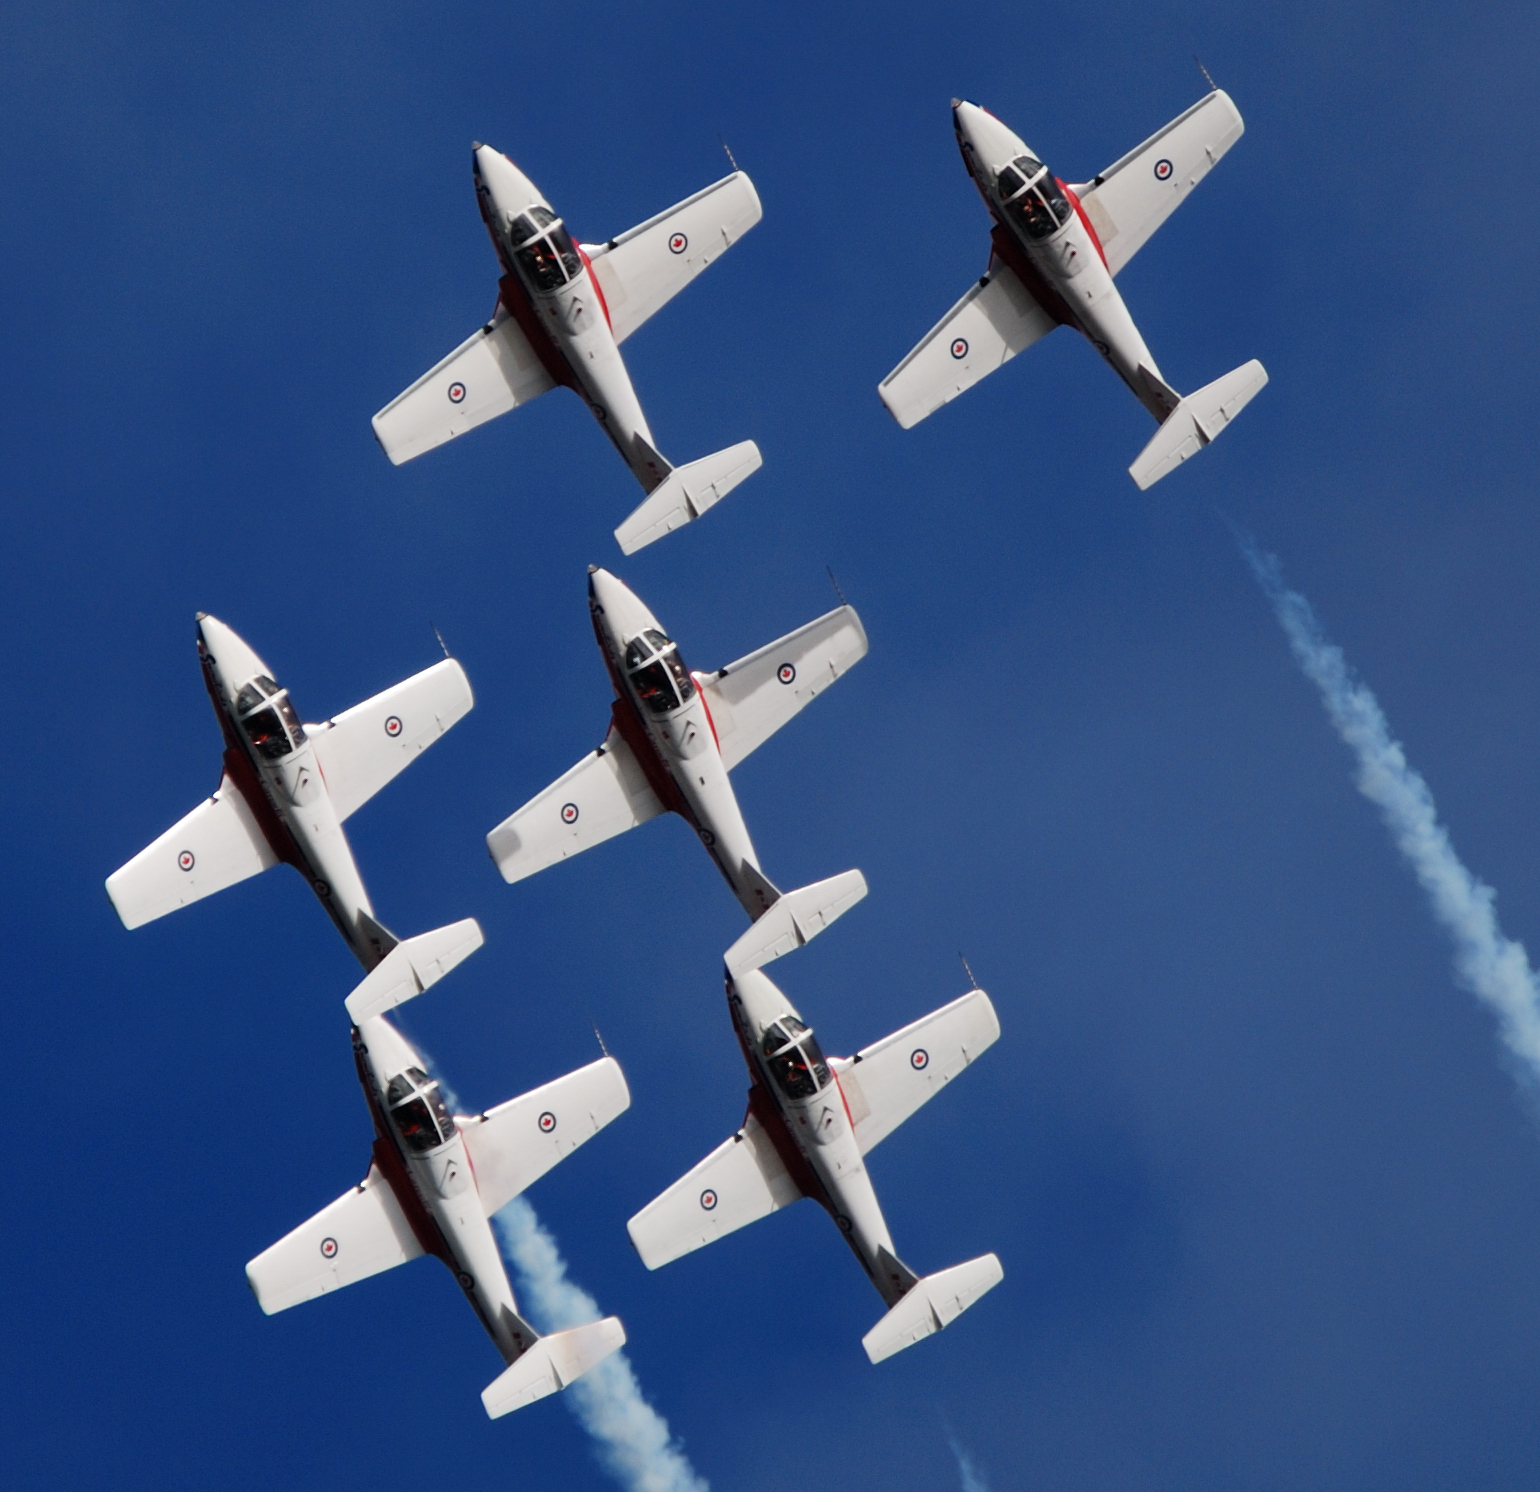 Six military aircraft perform an aerial display against a dark blue sky.